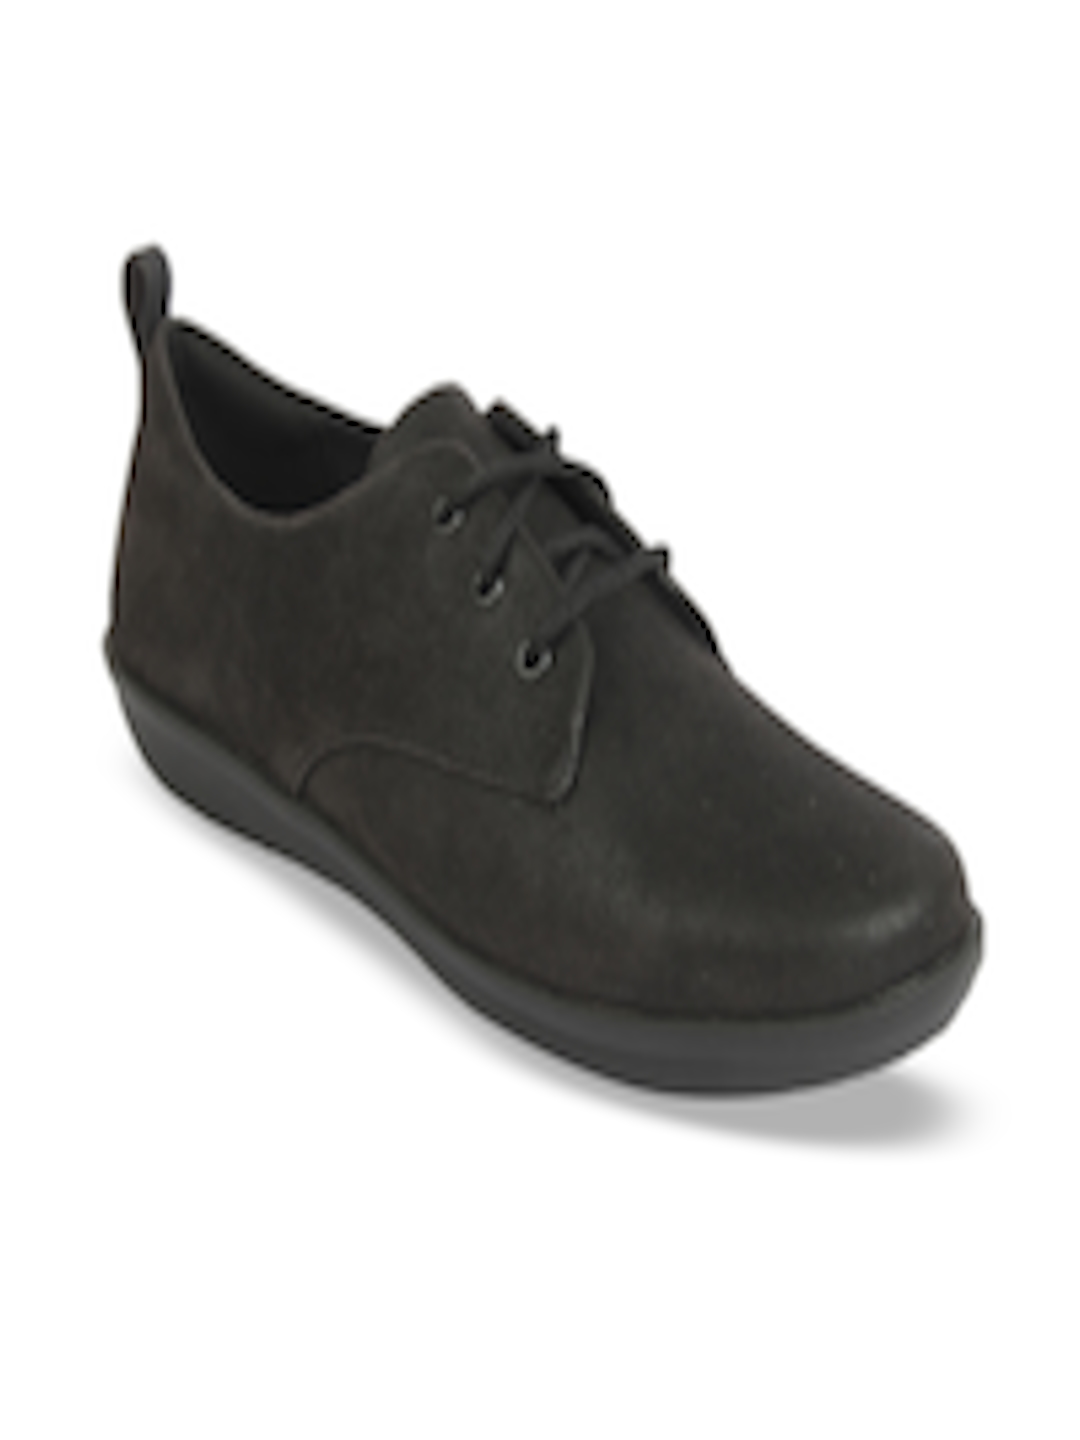 Buy Clarks Women Black Sneakers - Casual Shoes for Women 11169290 | Myntra